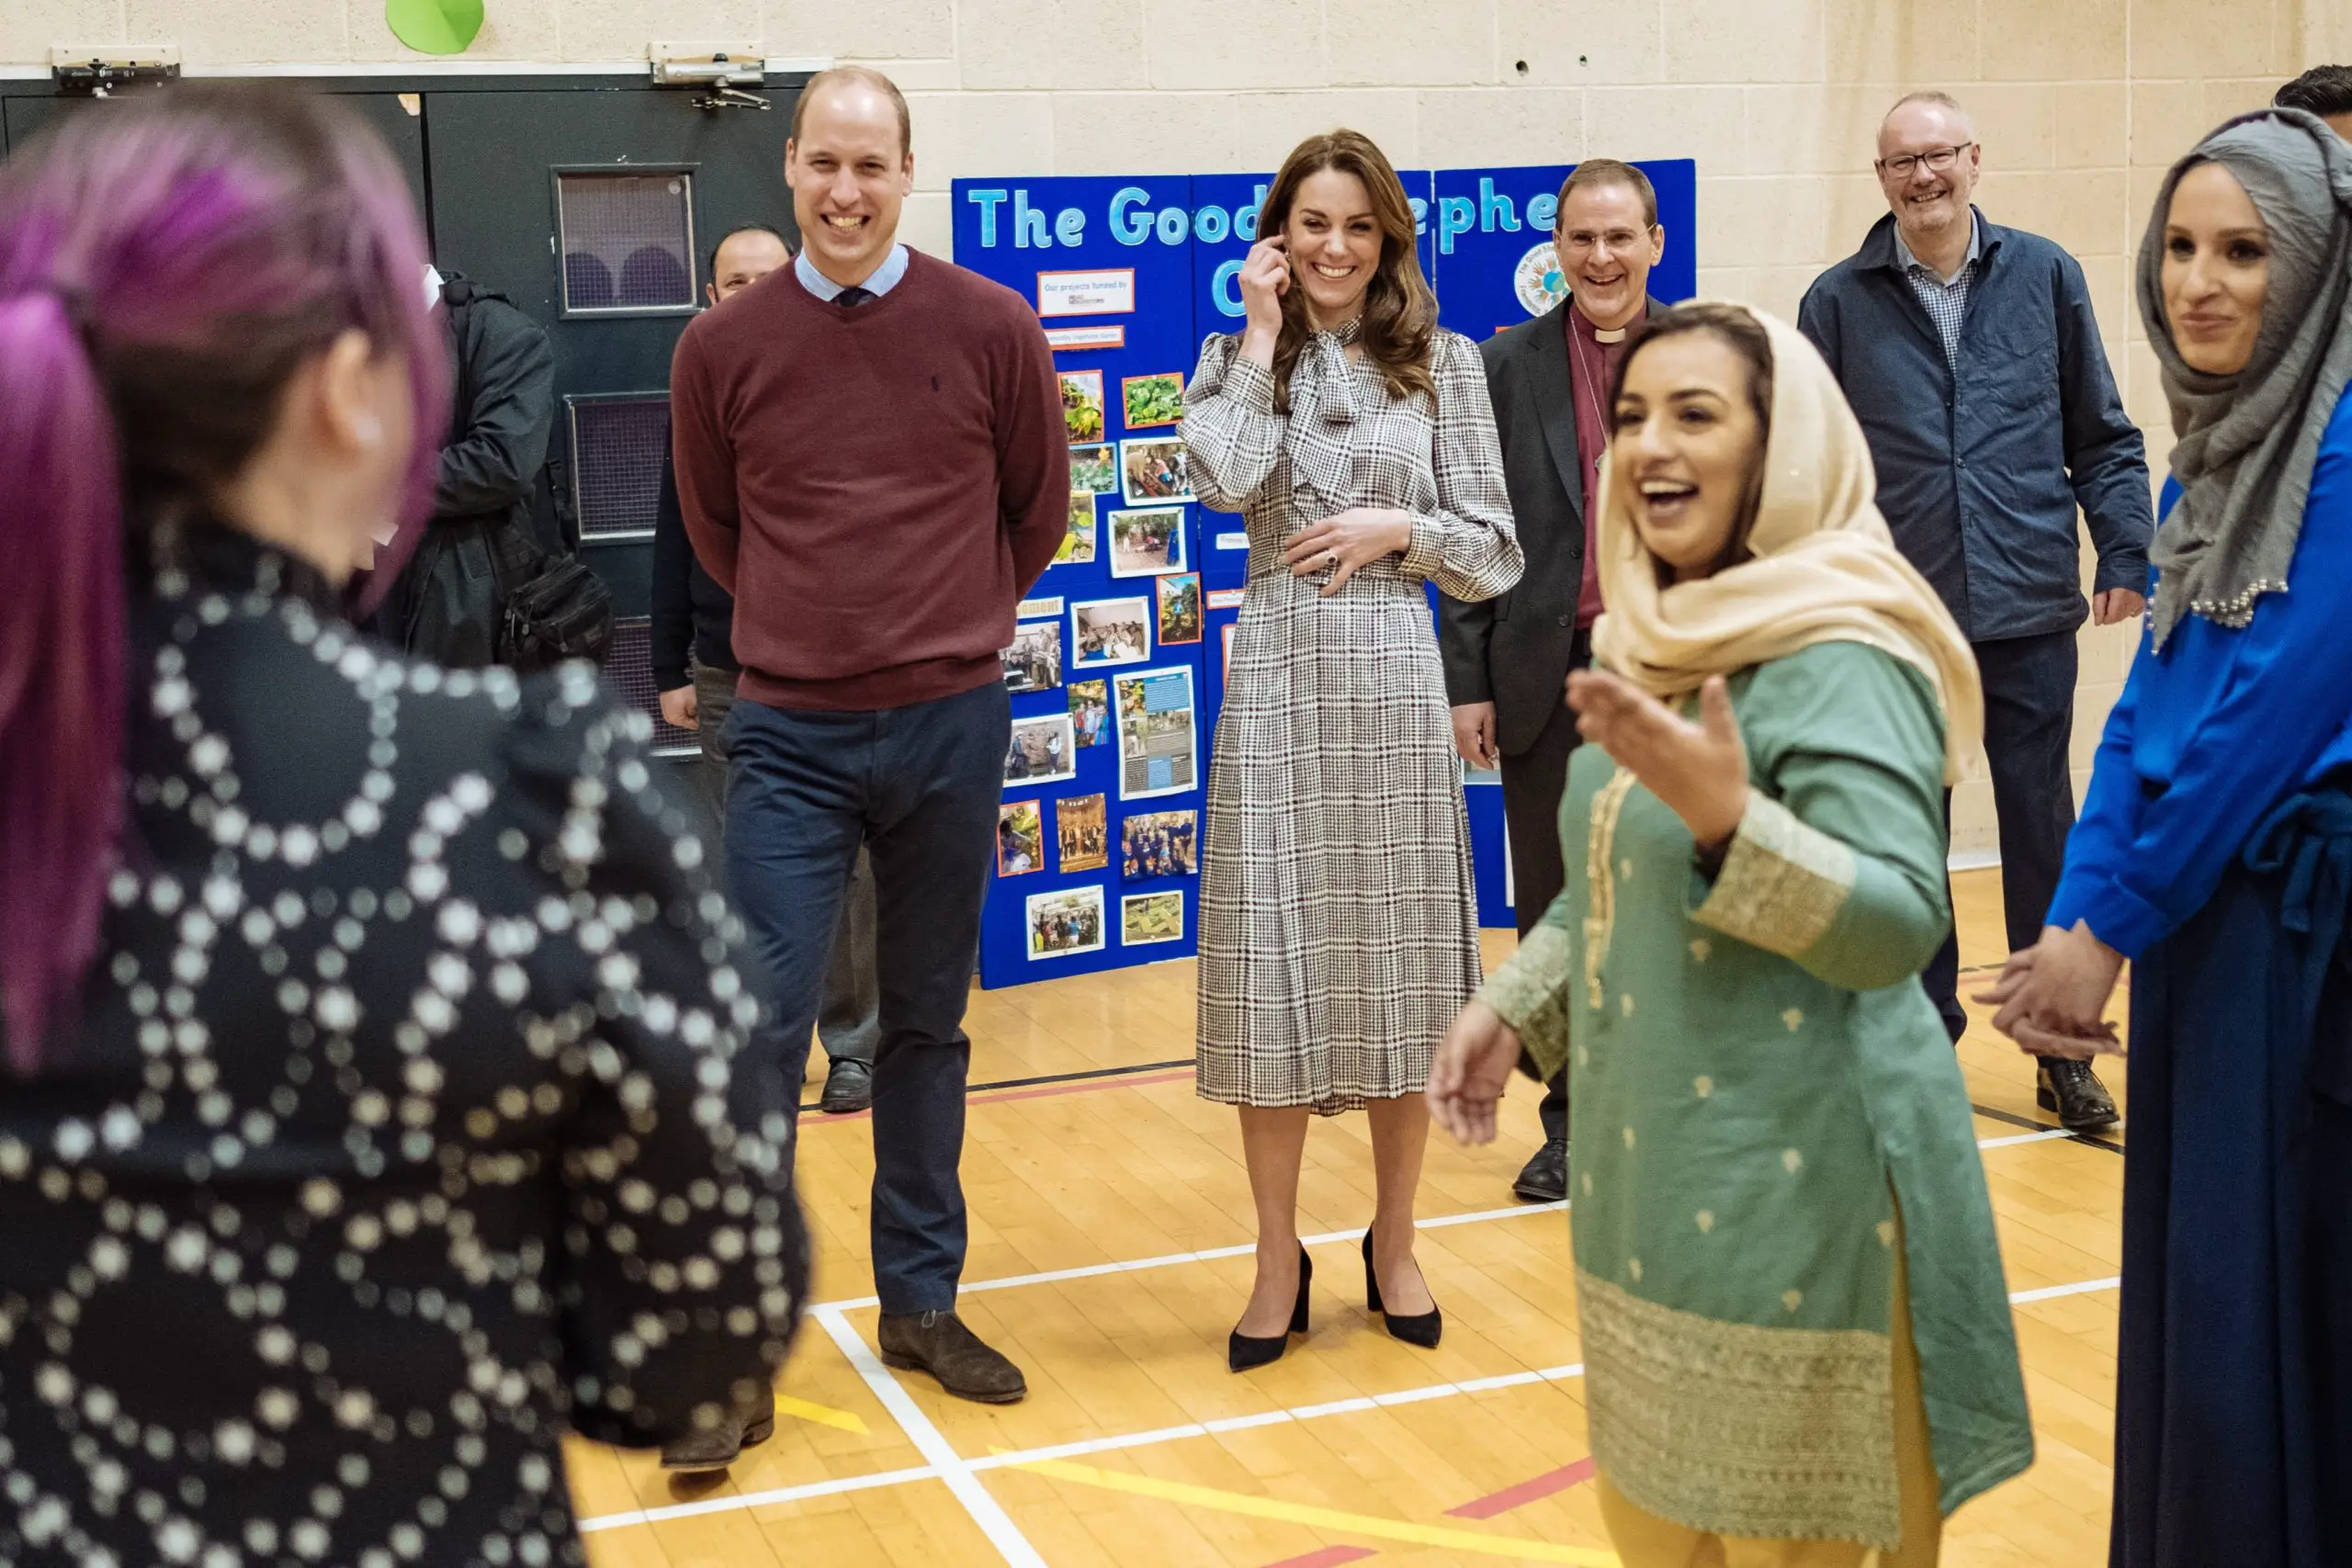 The Duke and Duchess of Cambridge visited Bradford’s Khidmat Centres in Bradford